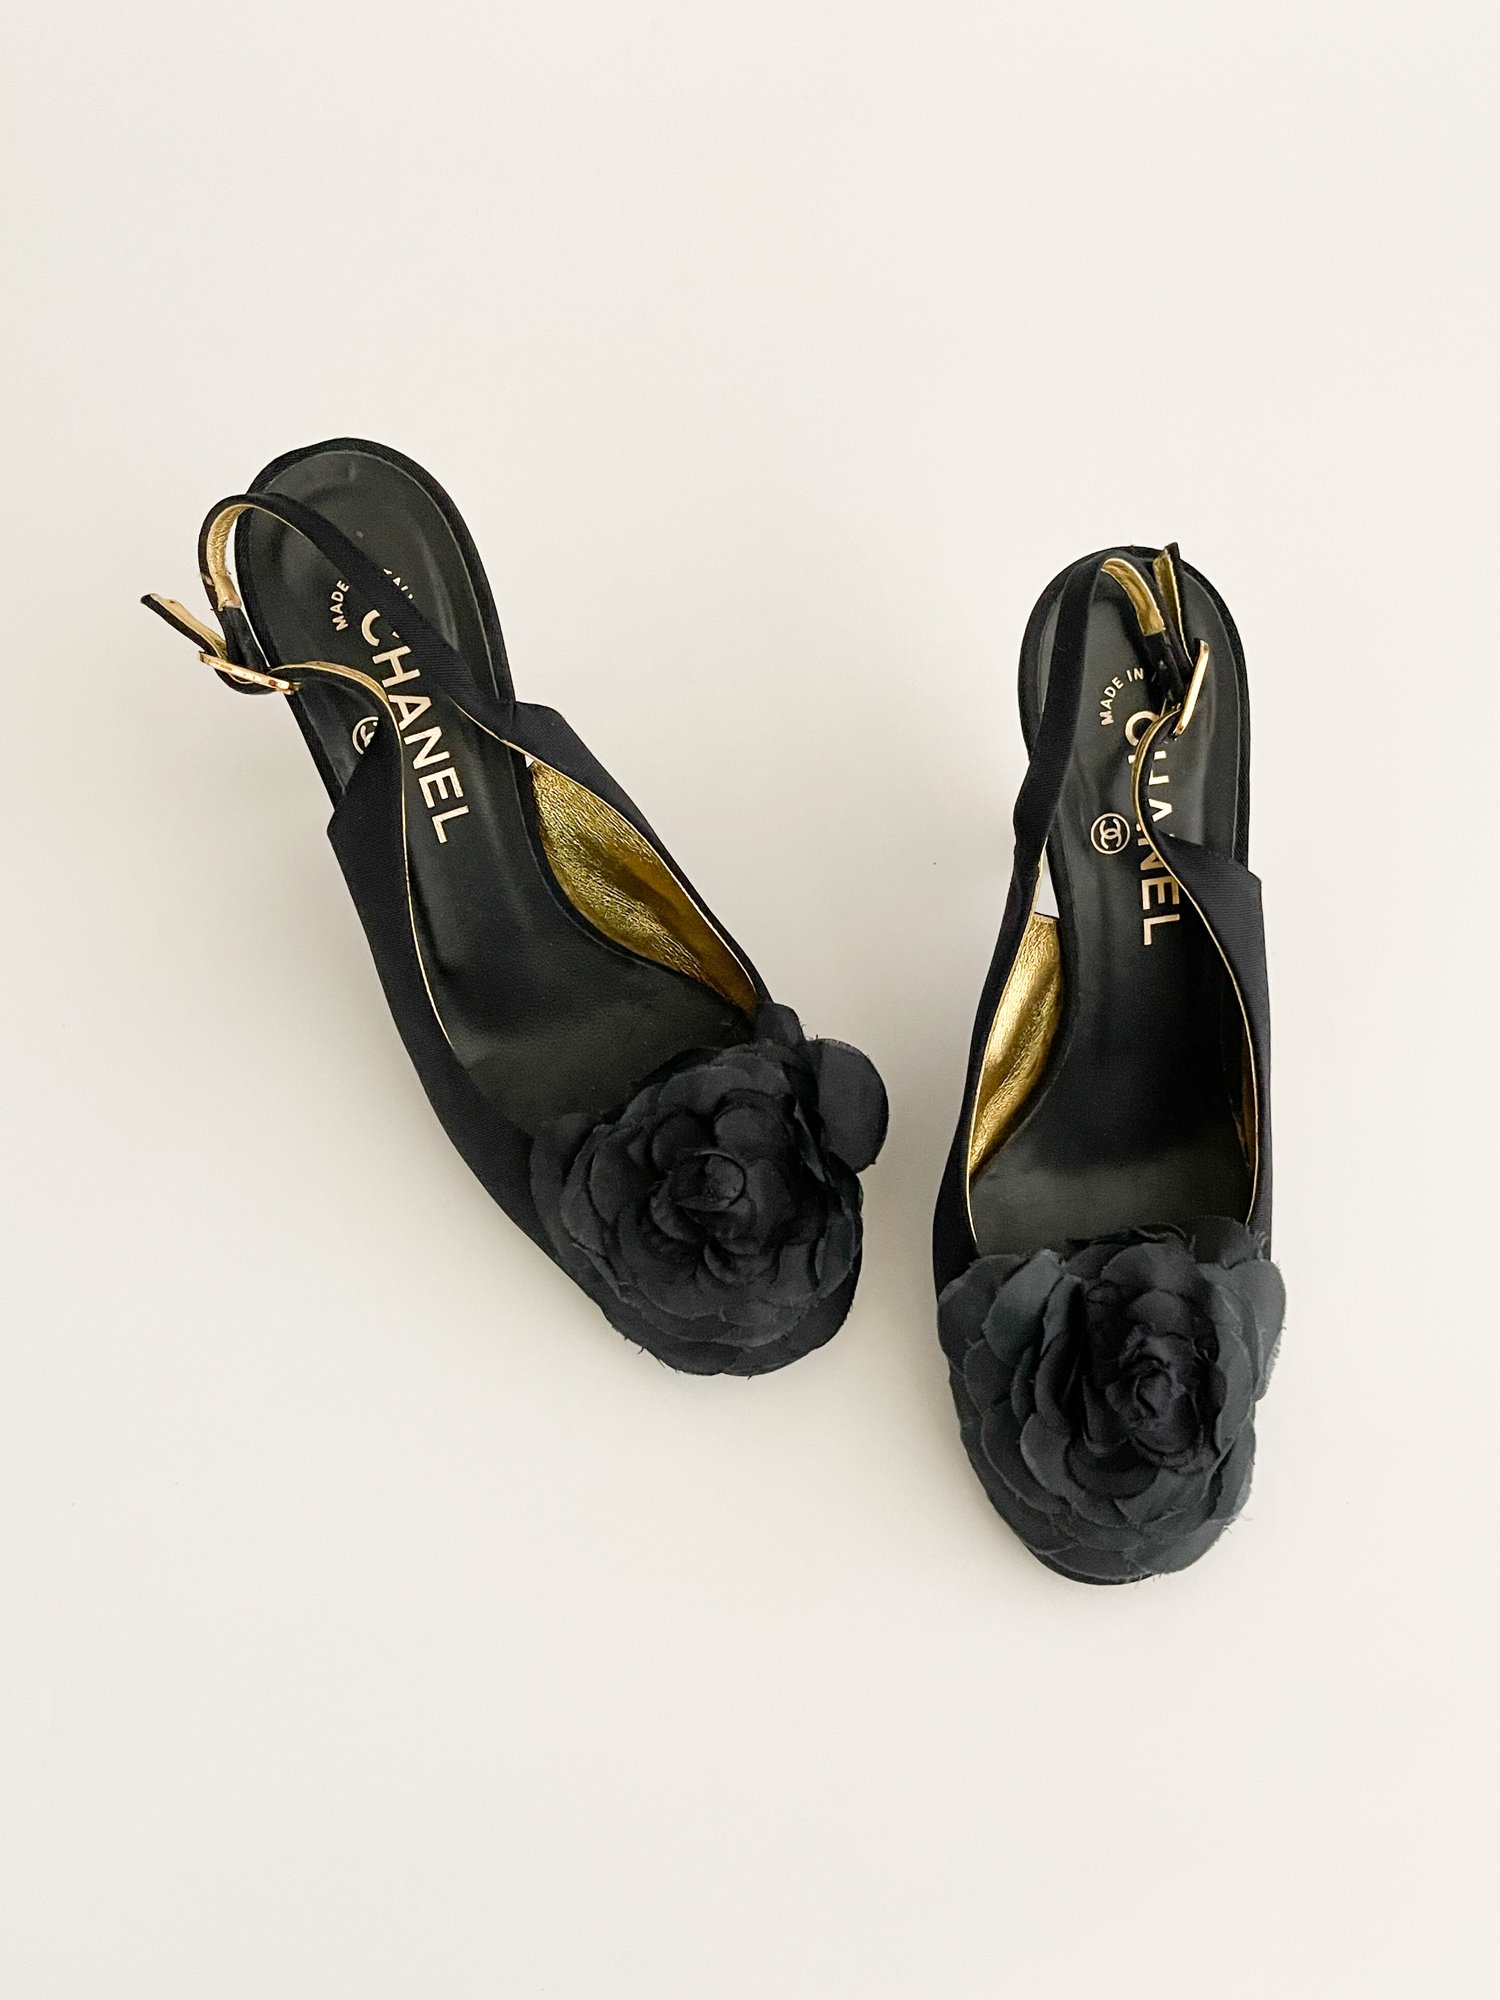 Chanel Iconic Camellia Black & Gold CC Slingback Heels (US 8.5